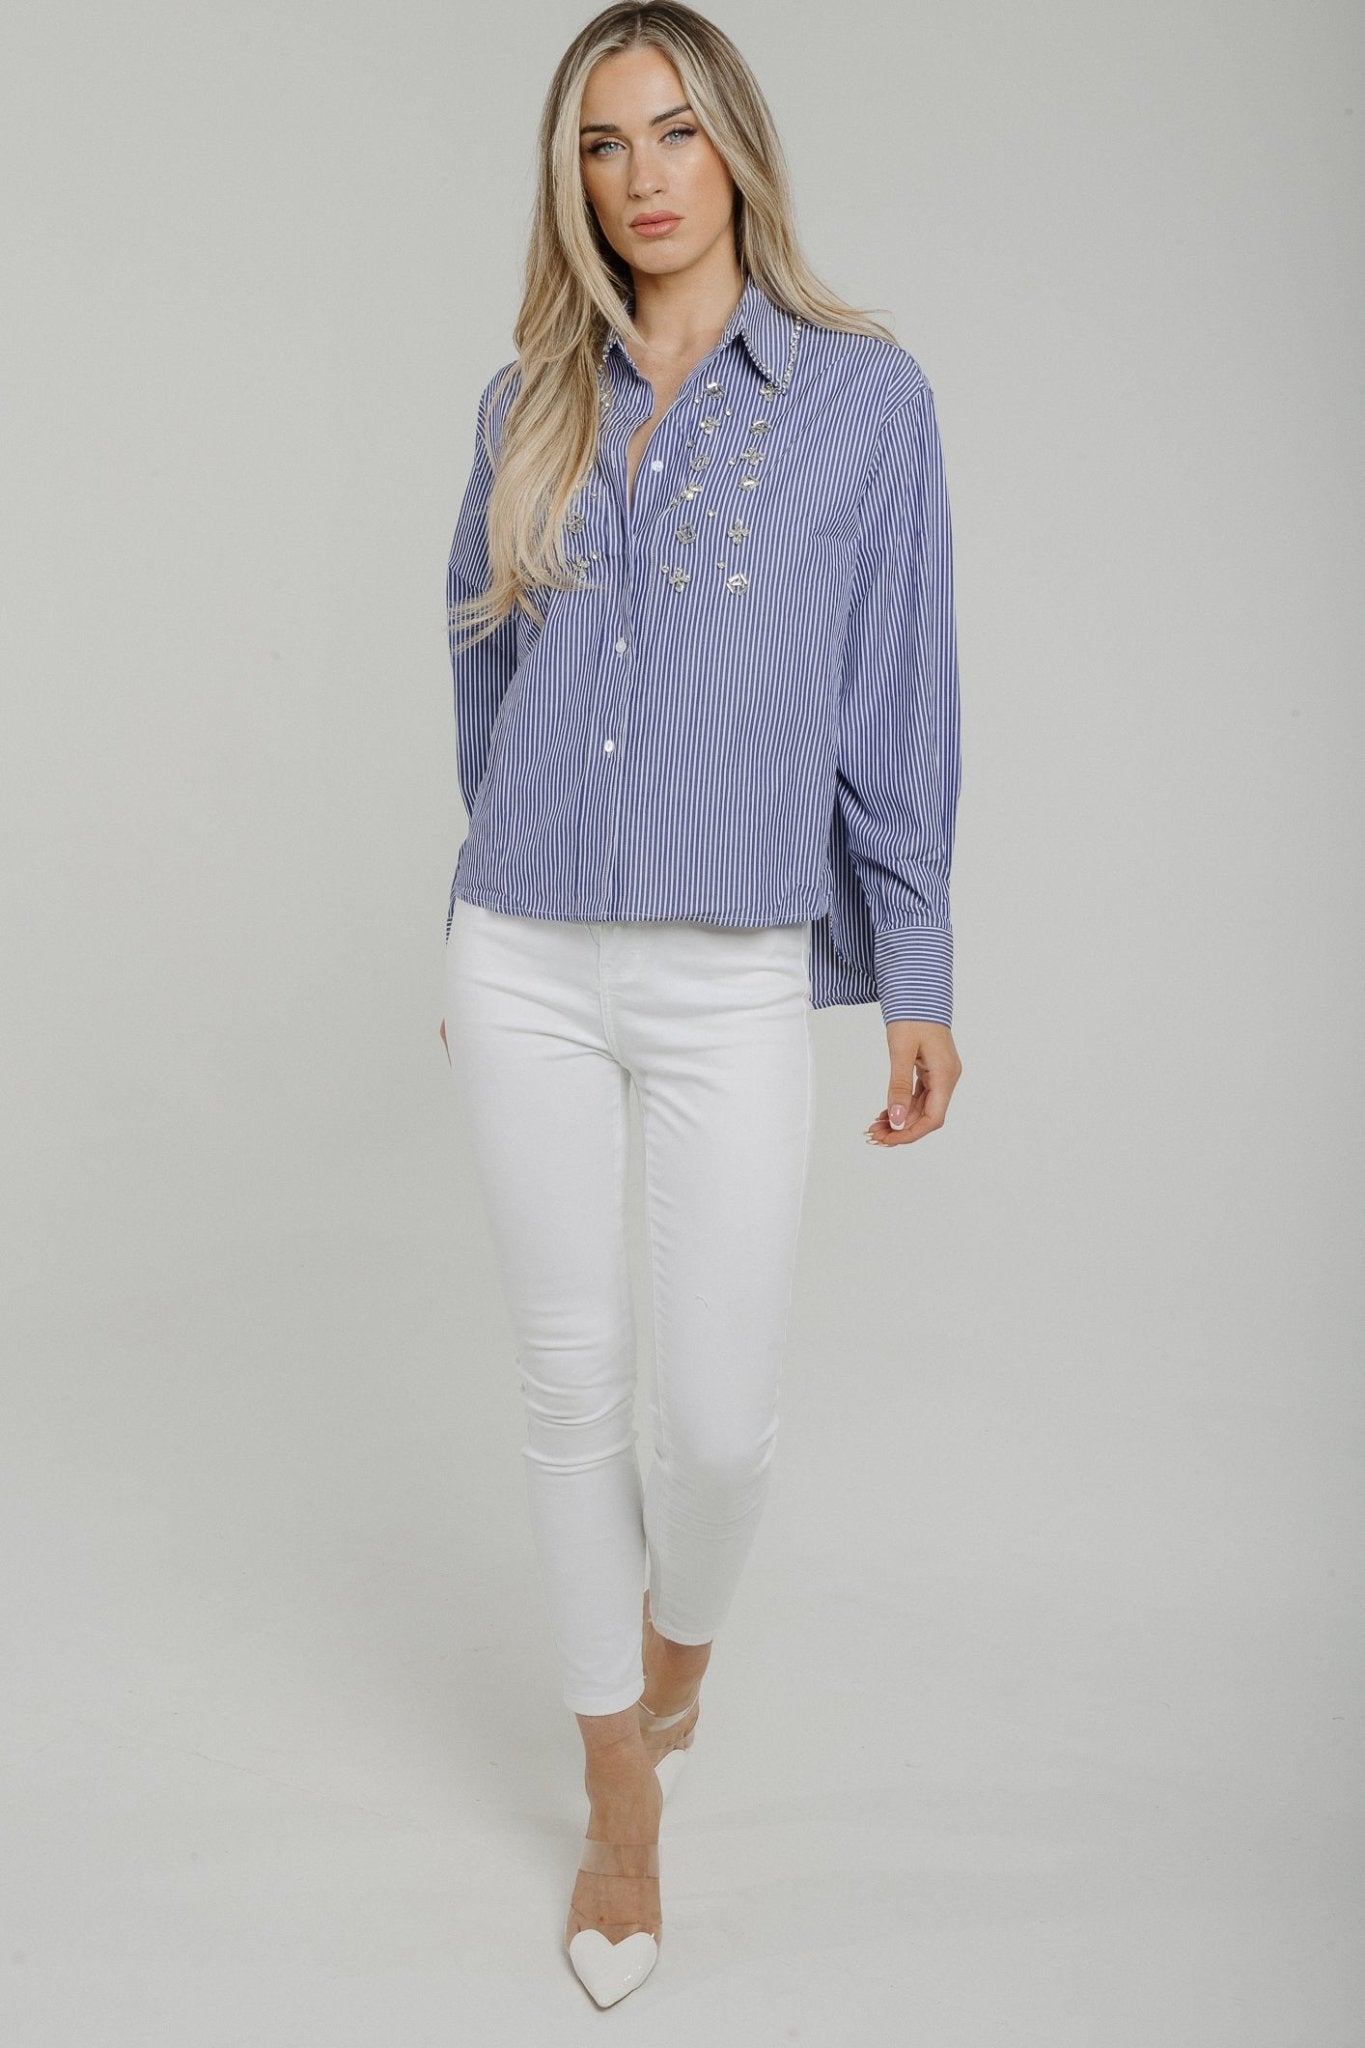 Holly Embellished Shirt In Blue Stripe - The Walk in Wardrobe